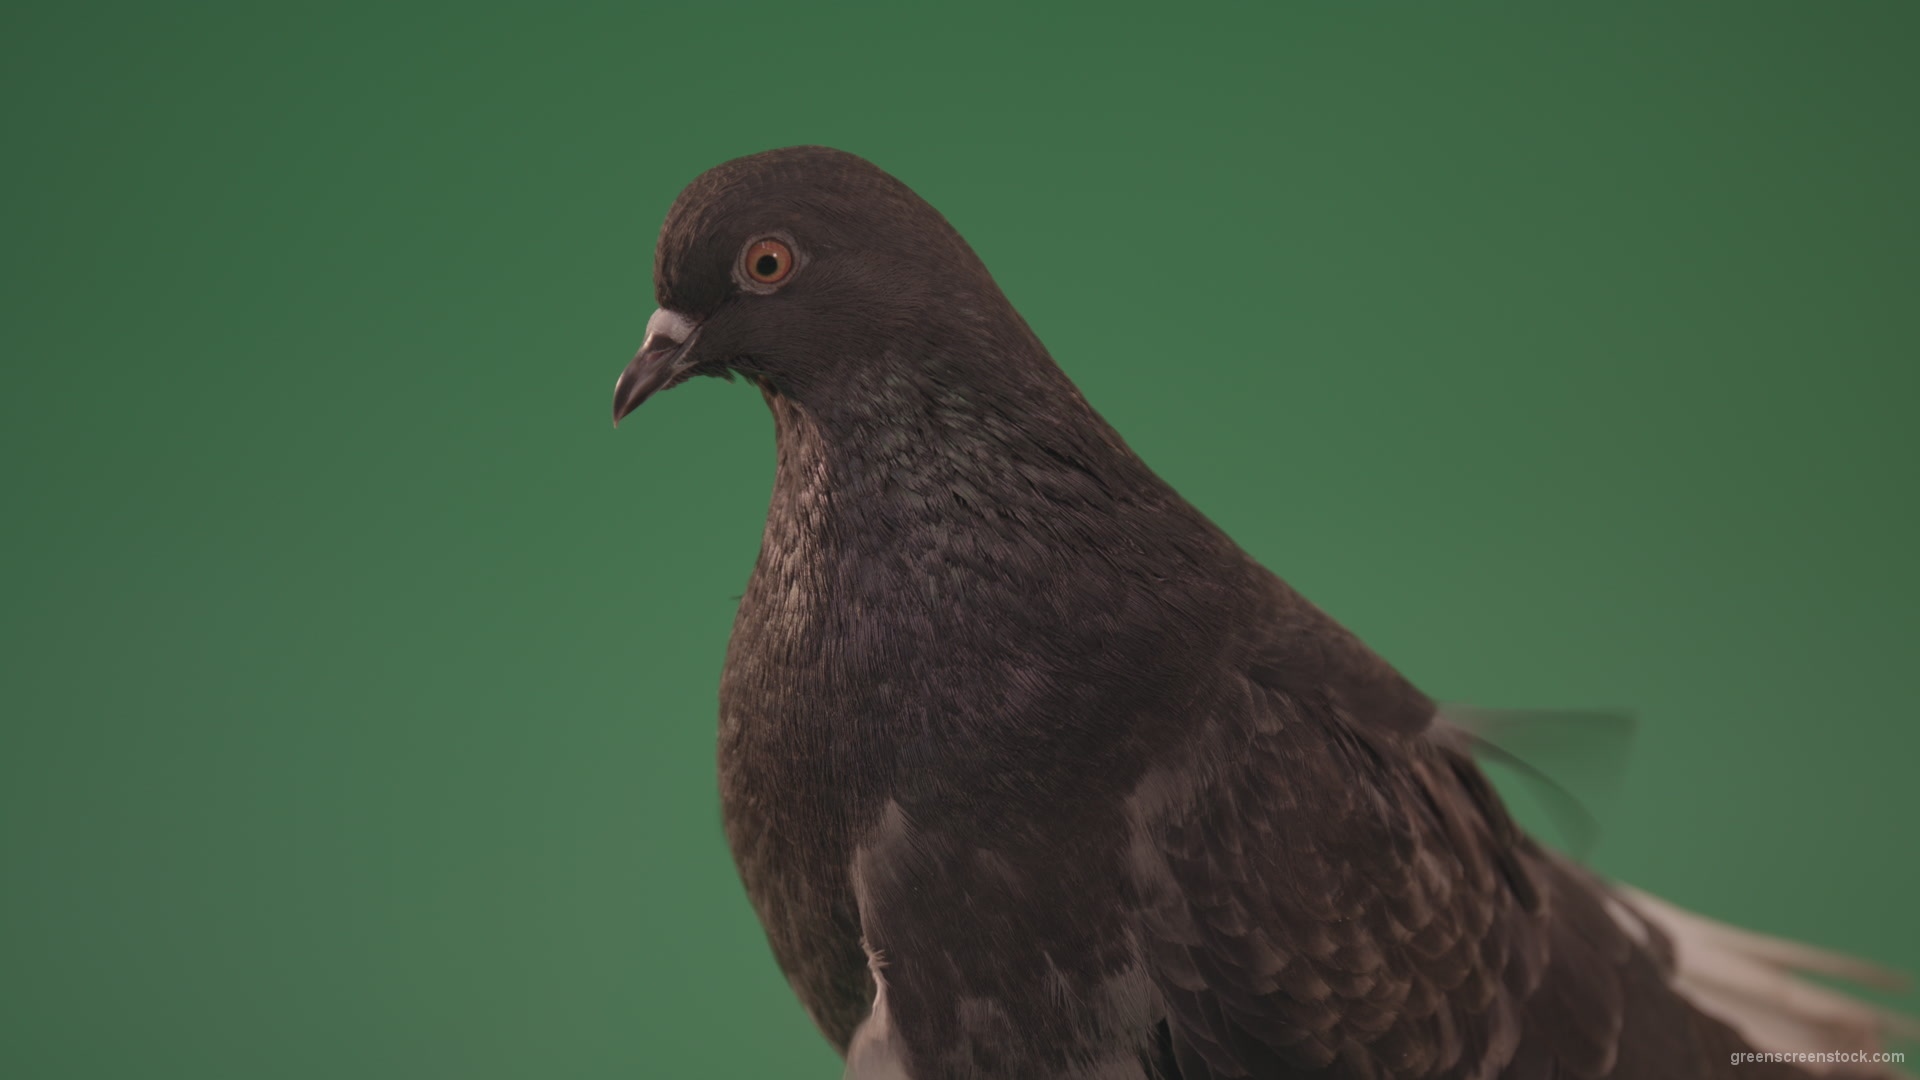 Gray-bird-of-mountain-origin-pigeon-strokes-its-lush-feathers-isolated-in-green-screen-studio_005 Green Screen Stock